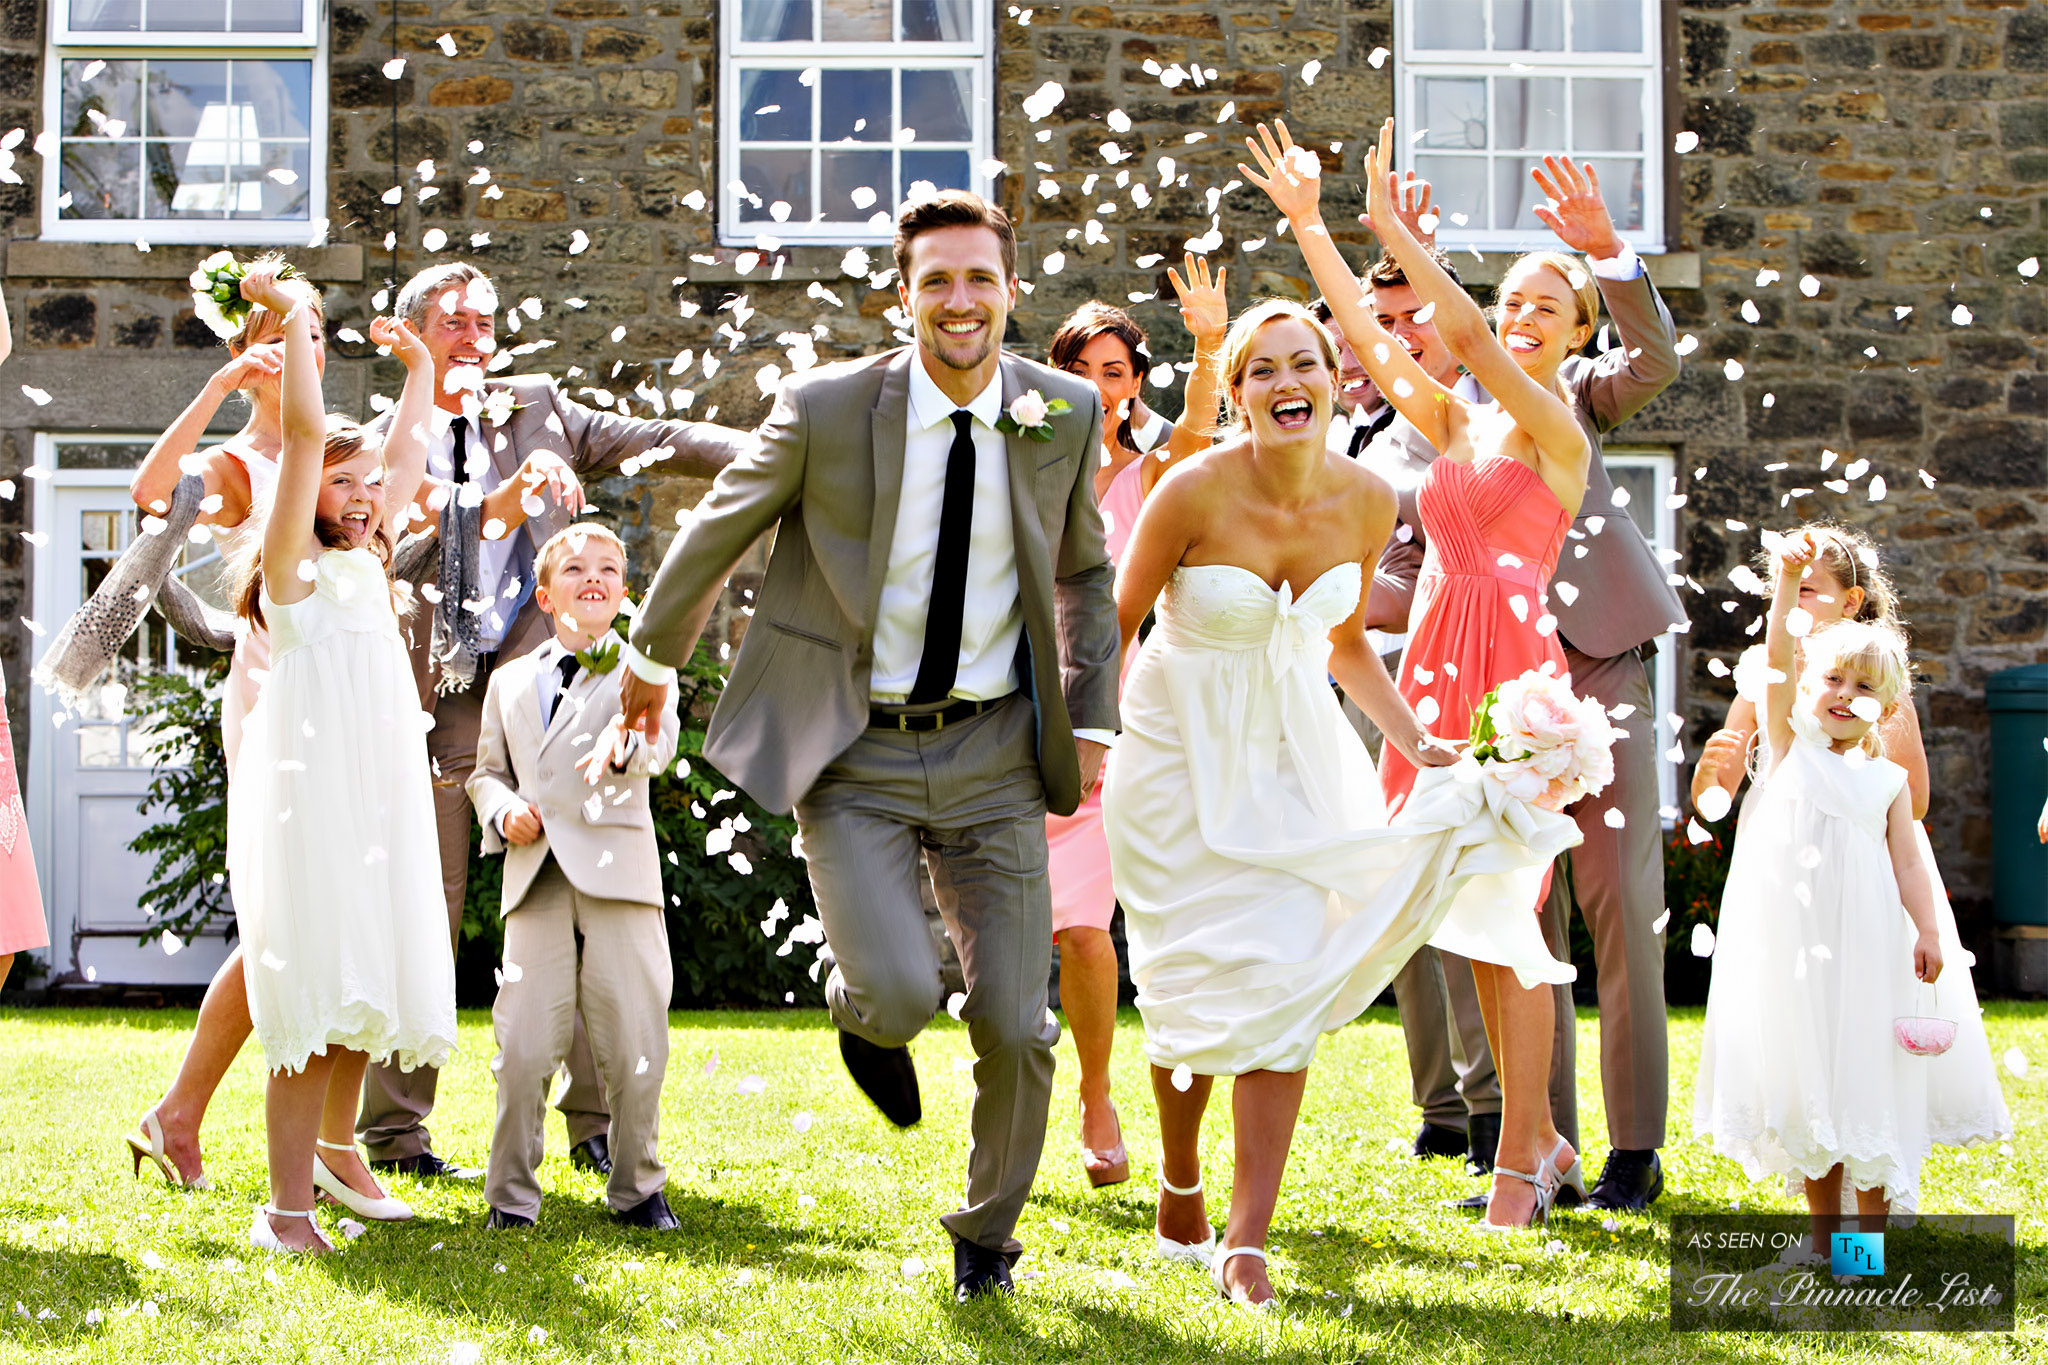 Cloud Seeding – The Latest in Luxury Wedding Trends